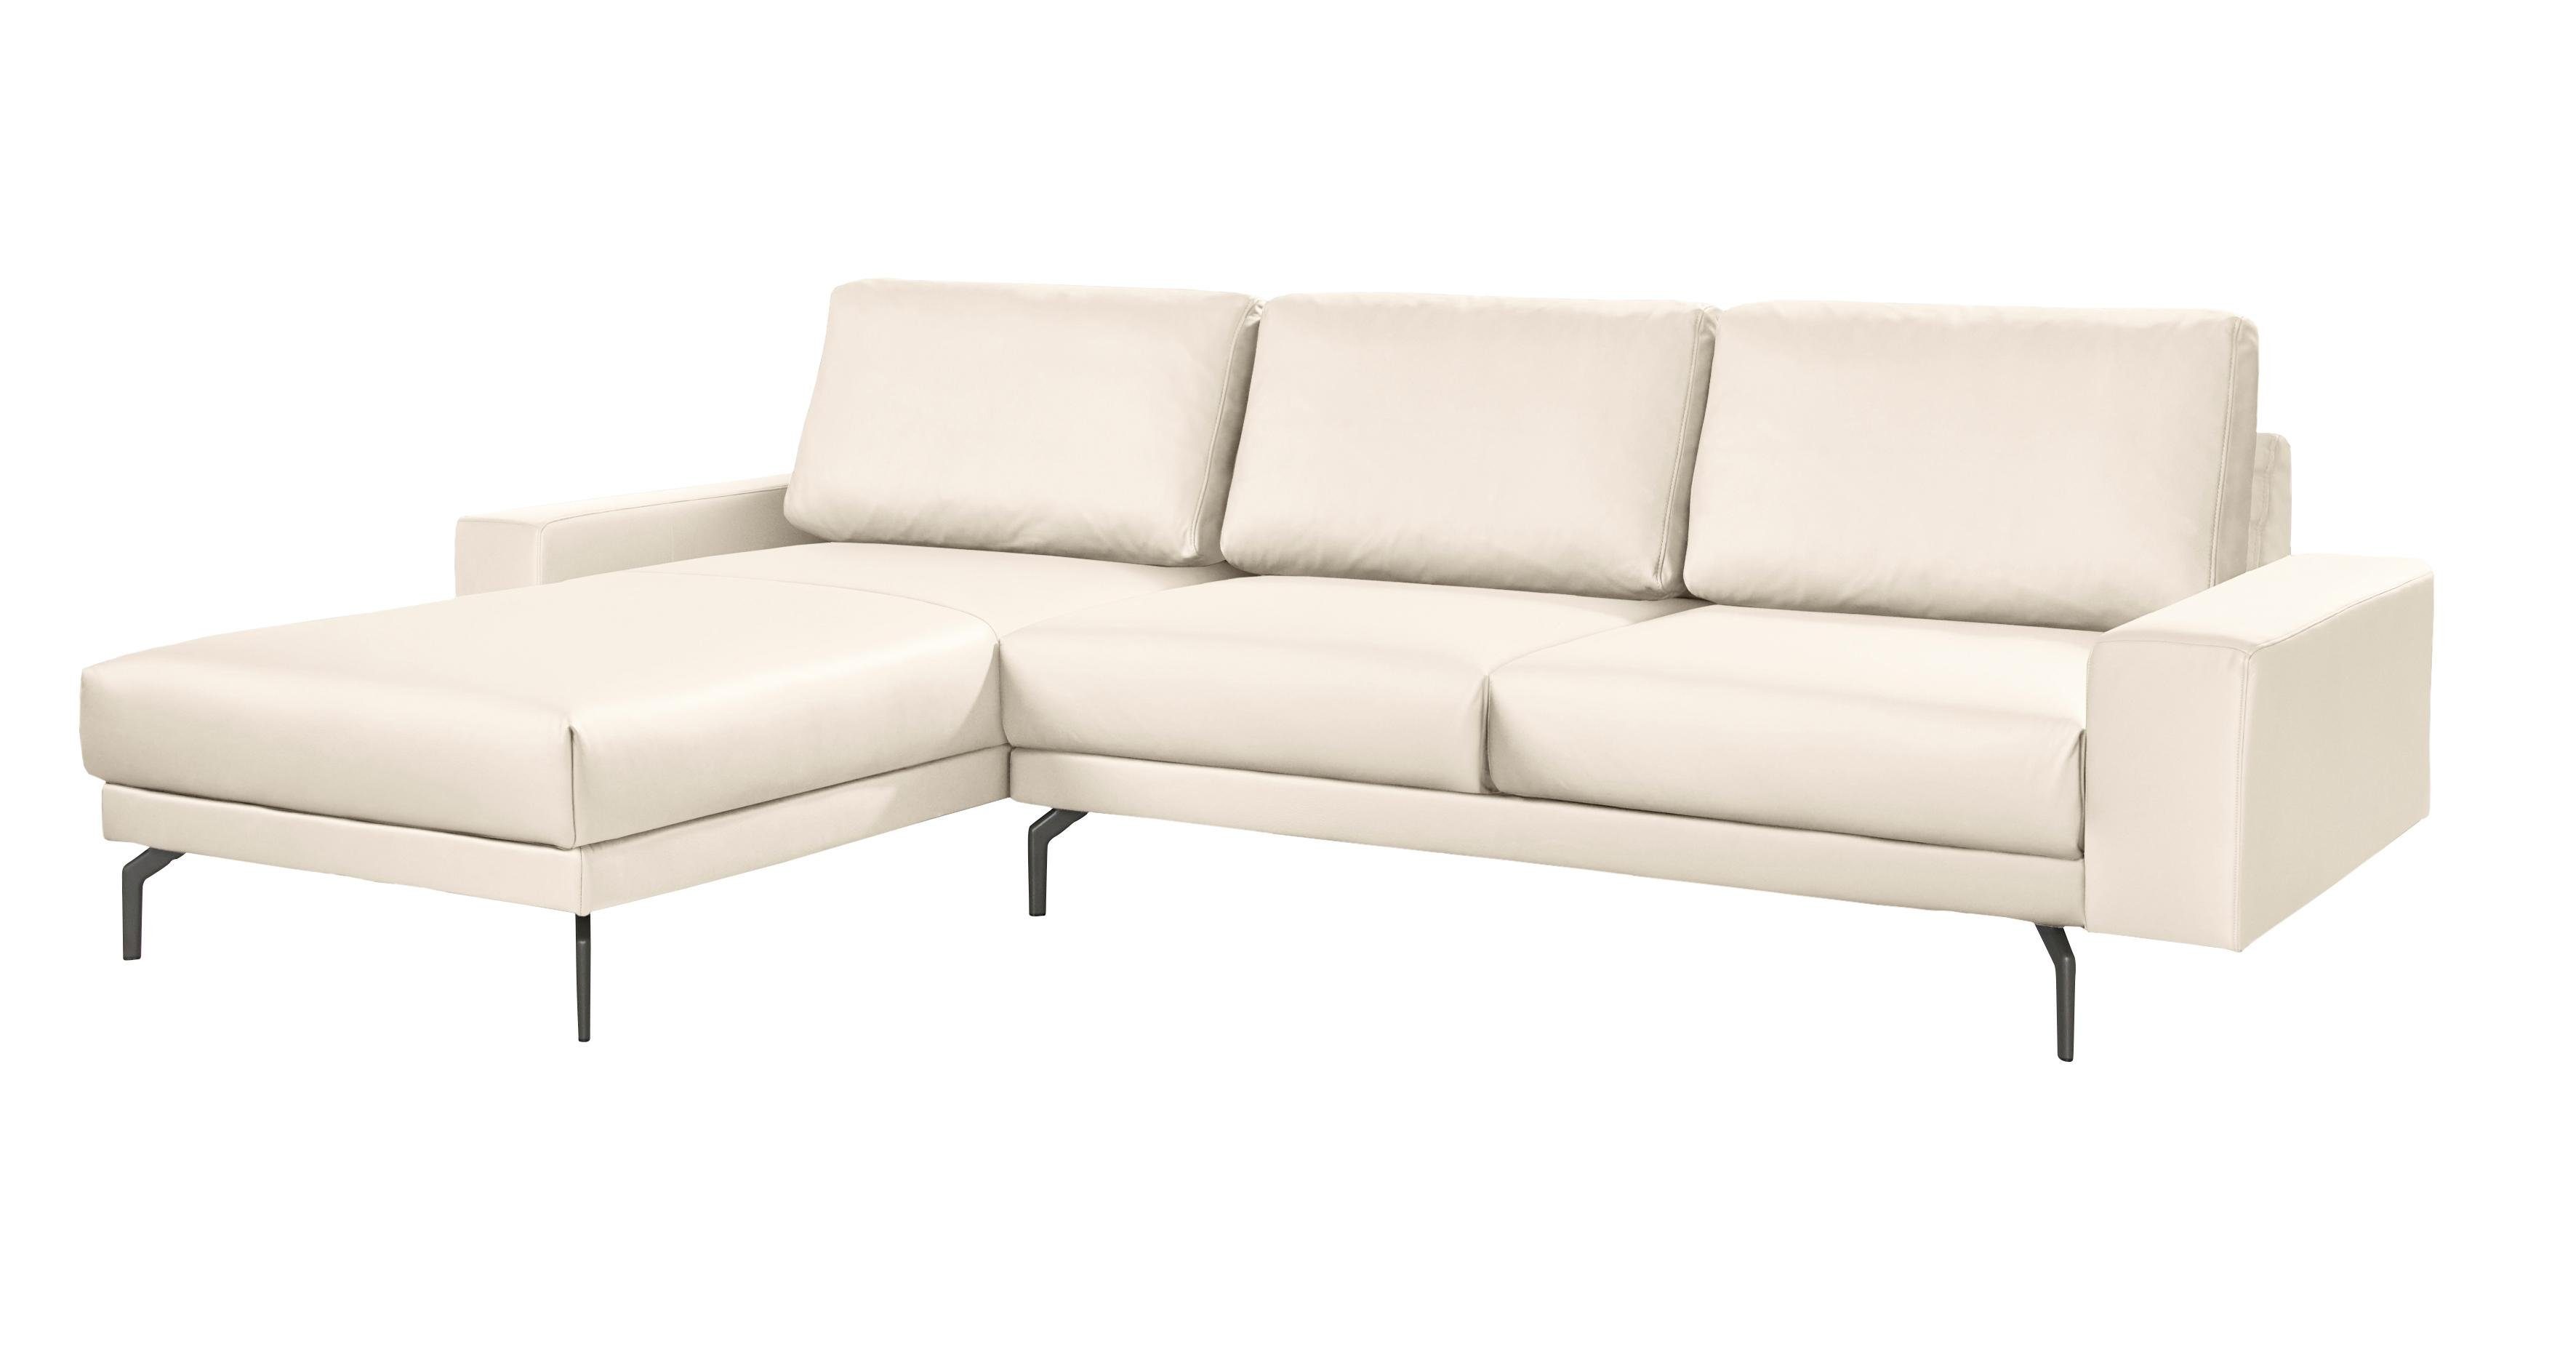 hülsta sofa Ecksofa hs.450, Armlehne niedrig, Breite 274 Alugussfüße breit umbragrau, in cm und